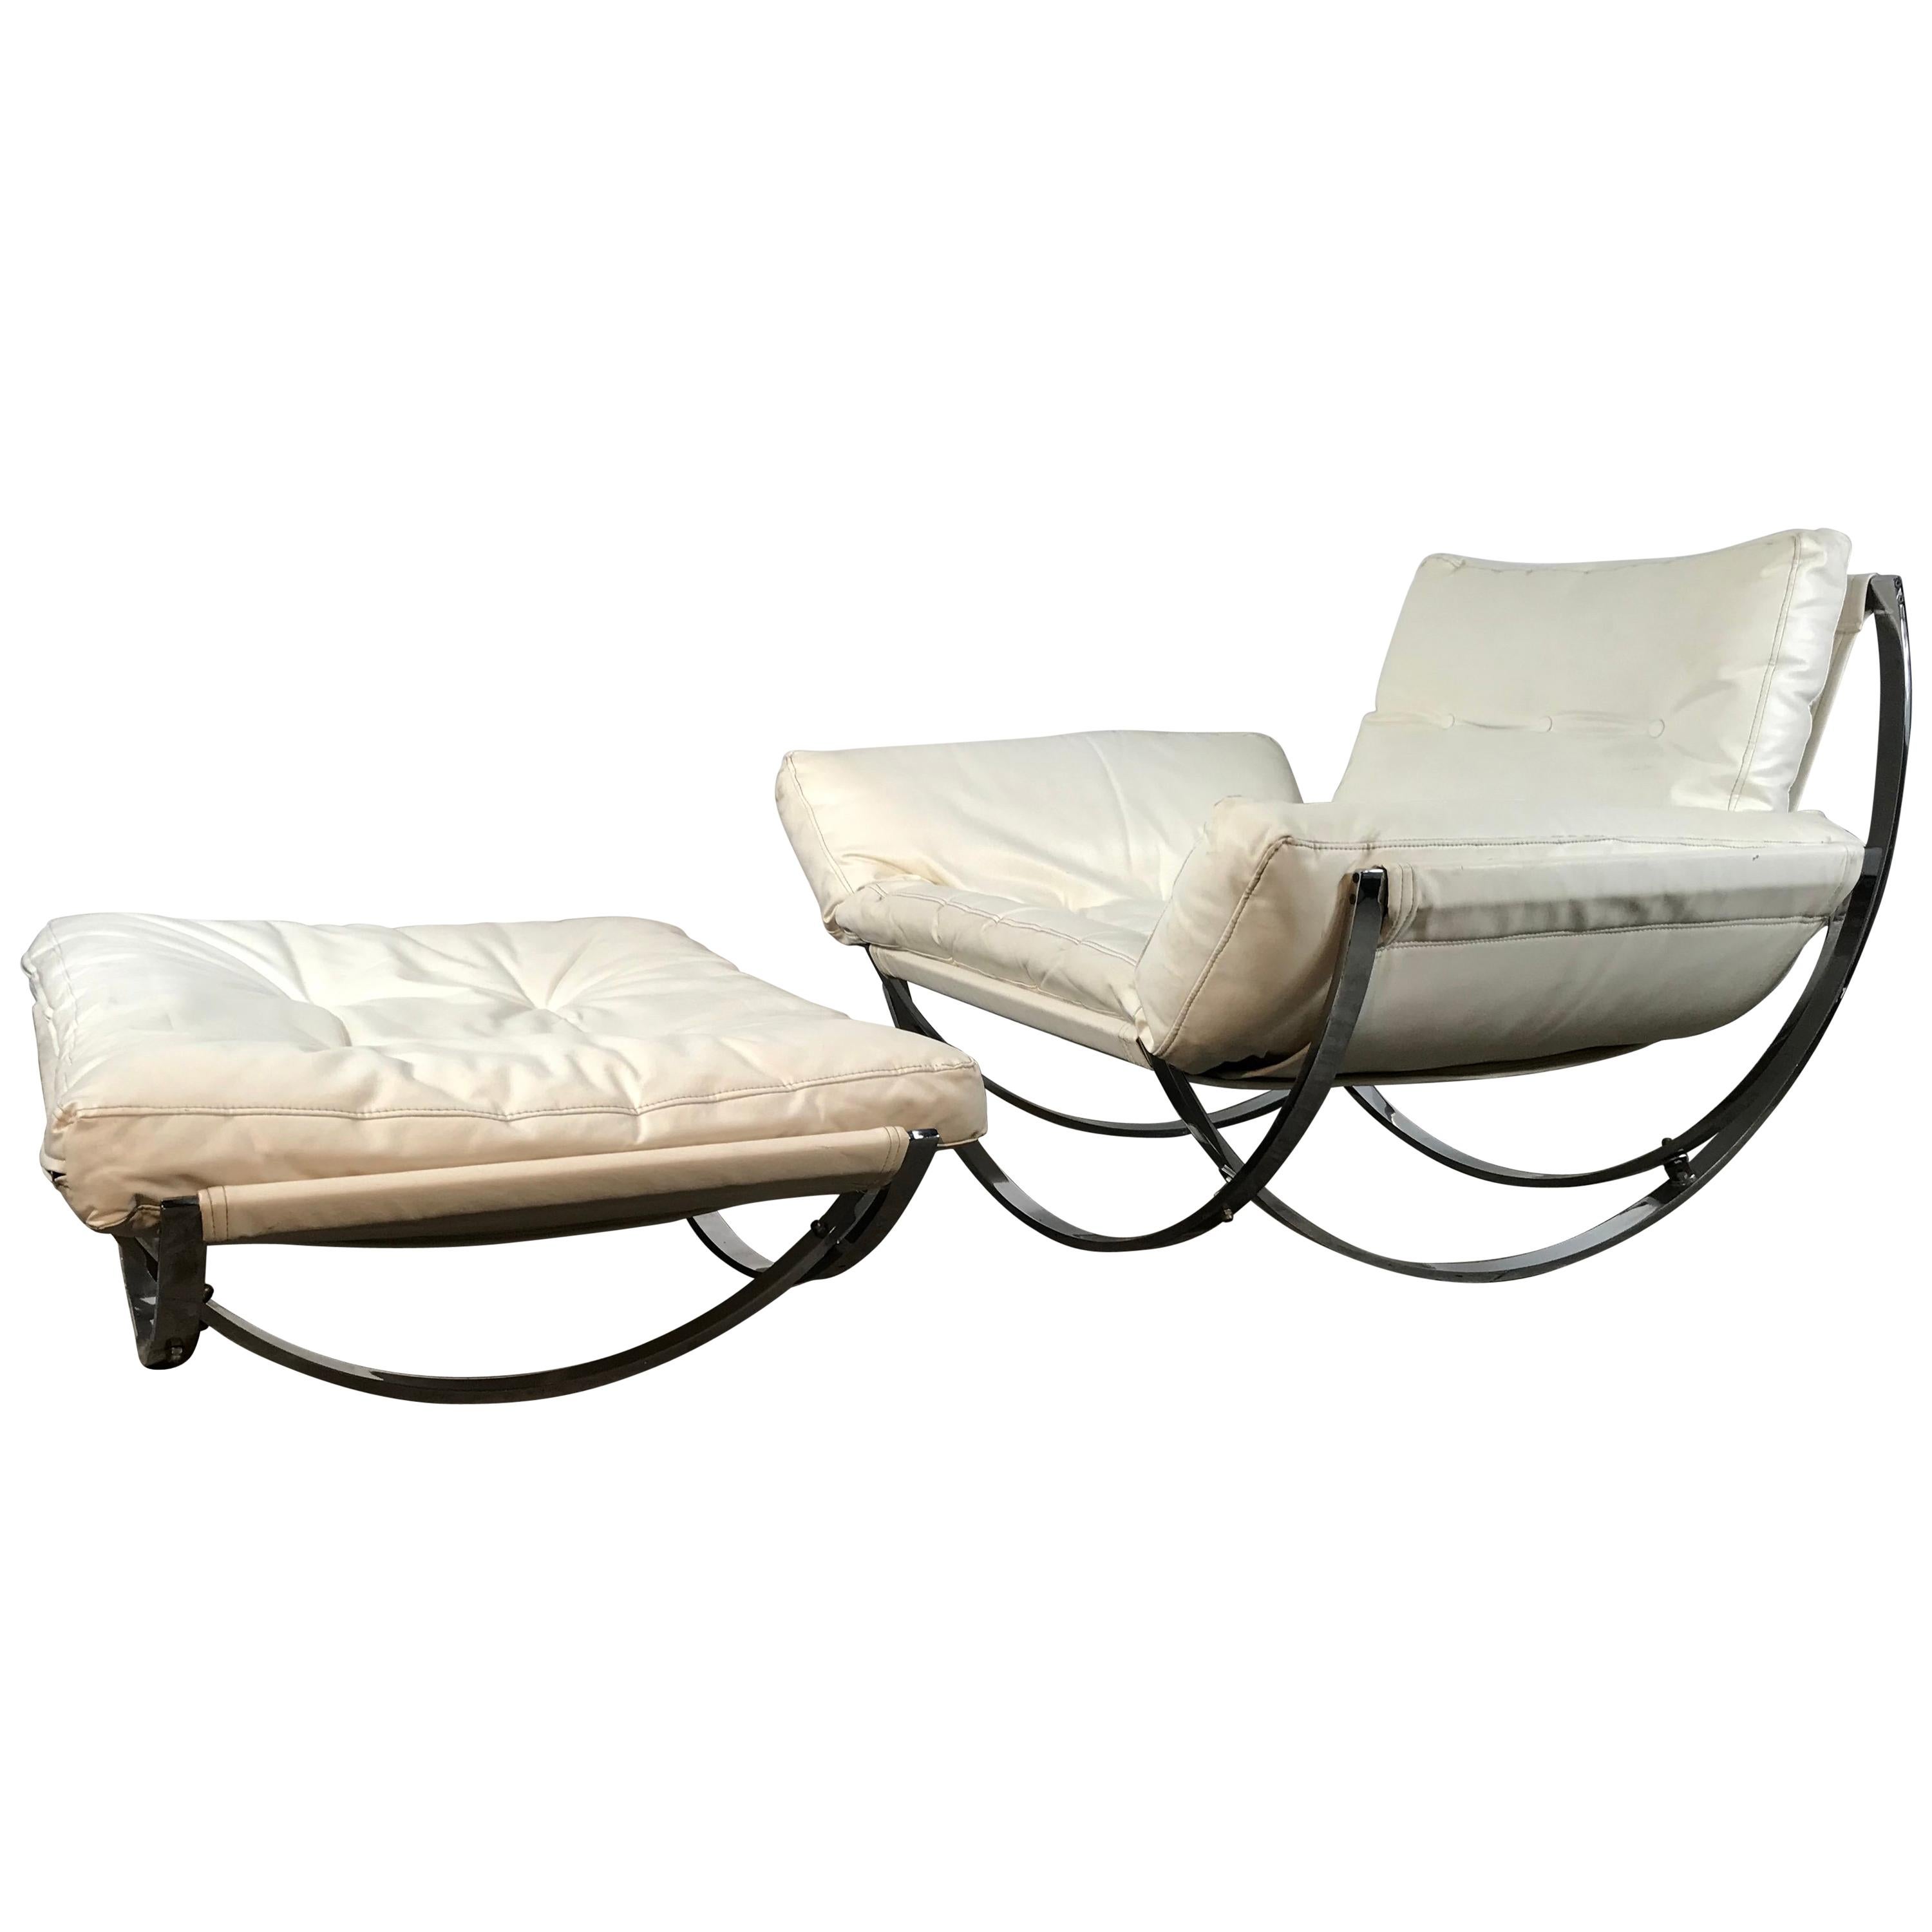 Chrome & Naugahyde "Apollo" Chair and Ottoman by Lennart Bender for Charlton